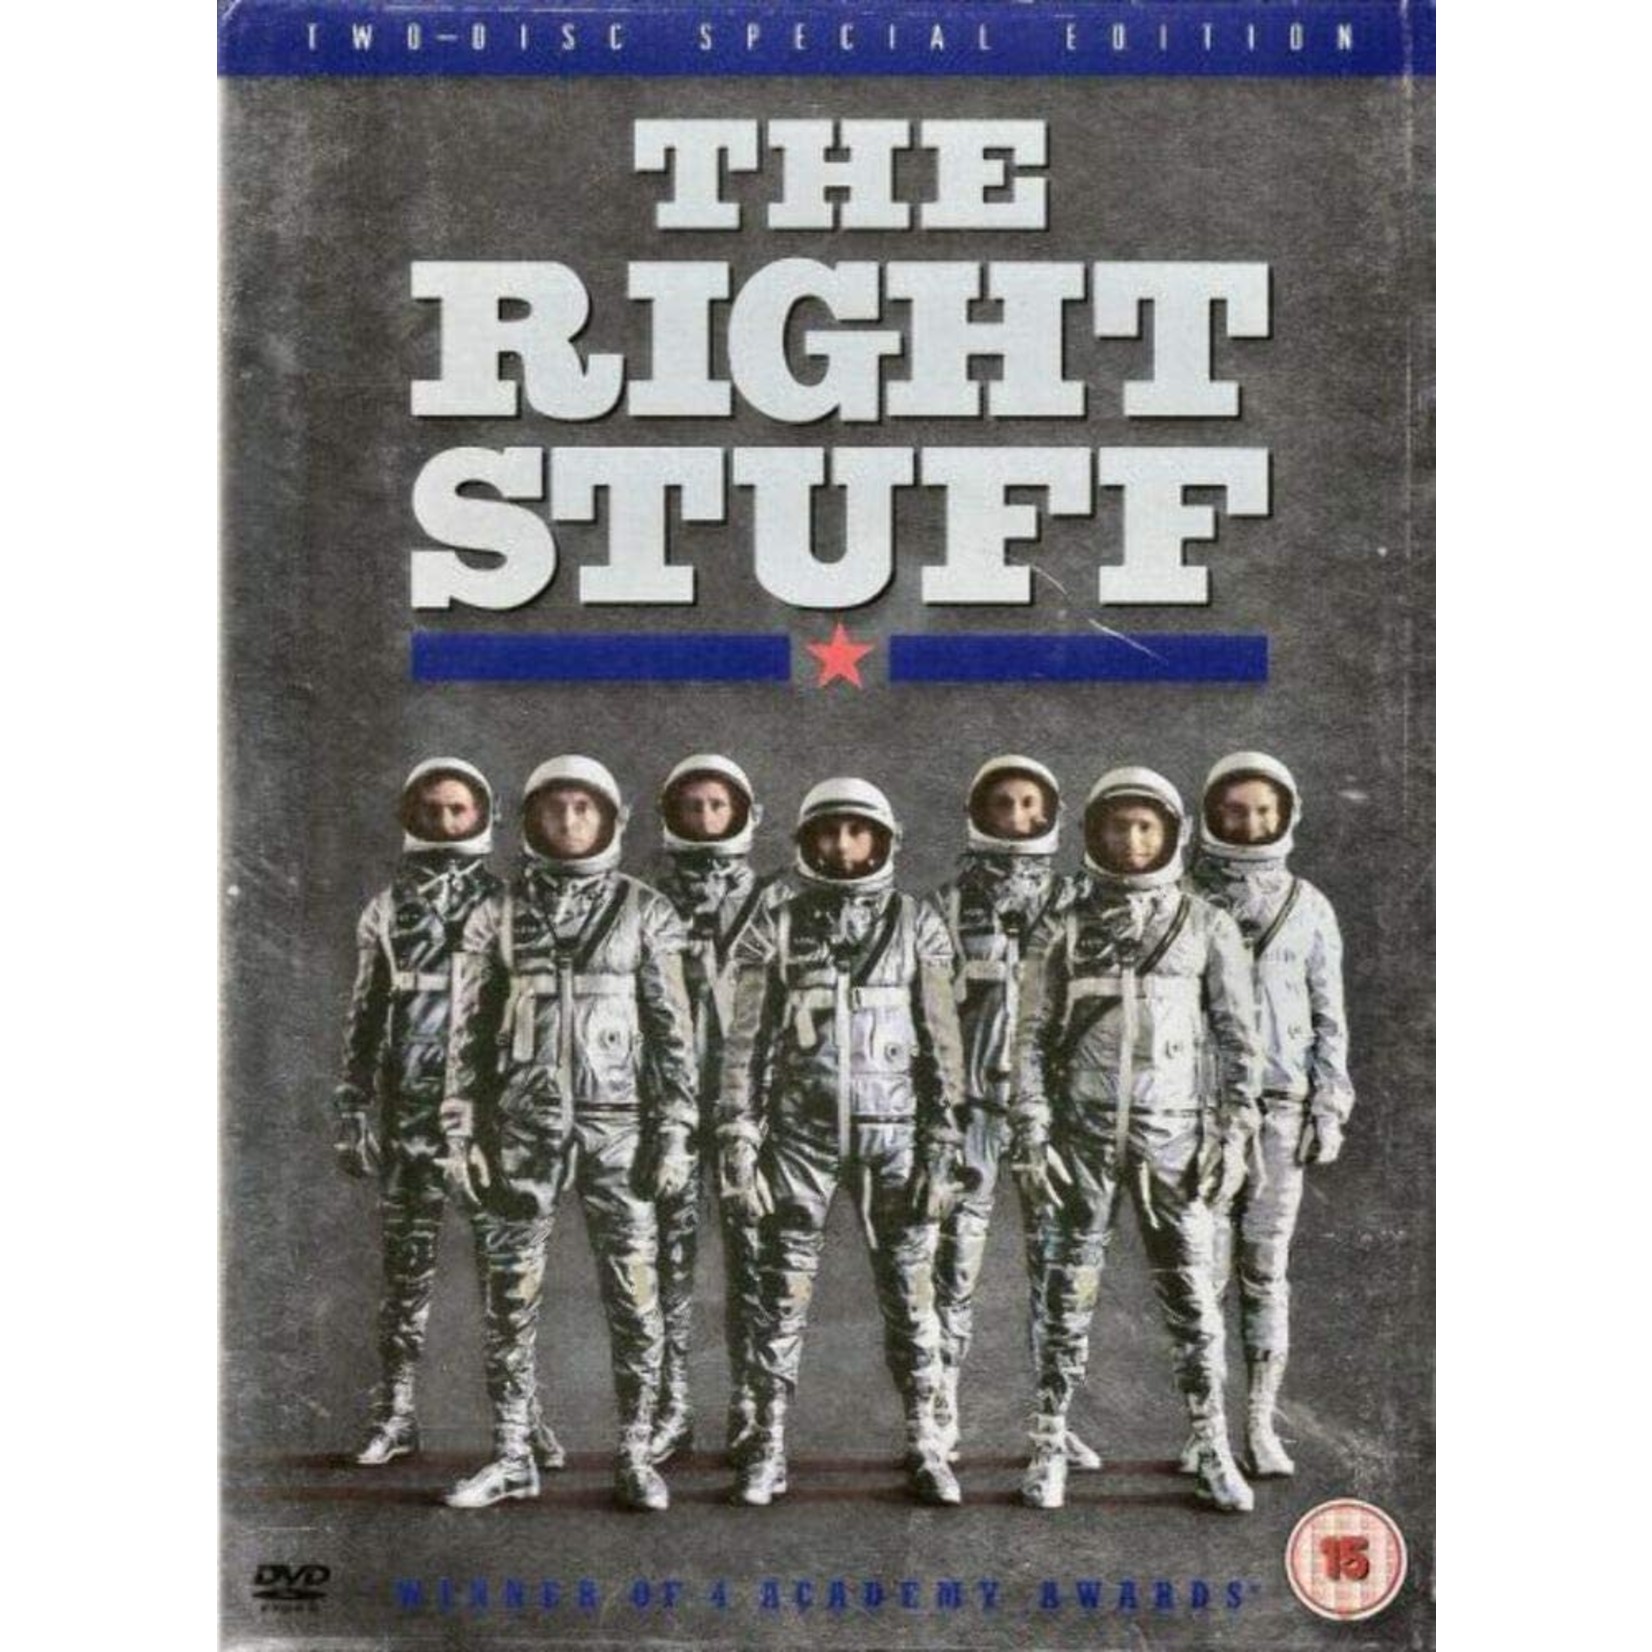 Right Stuff (1983) [USED 2DVD]